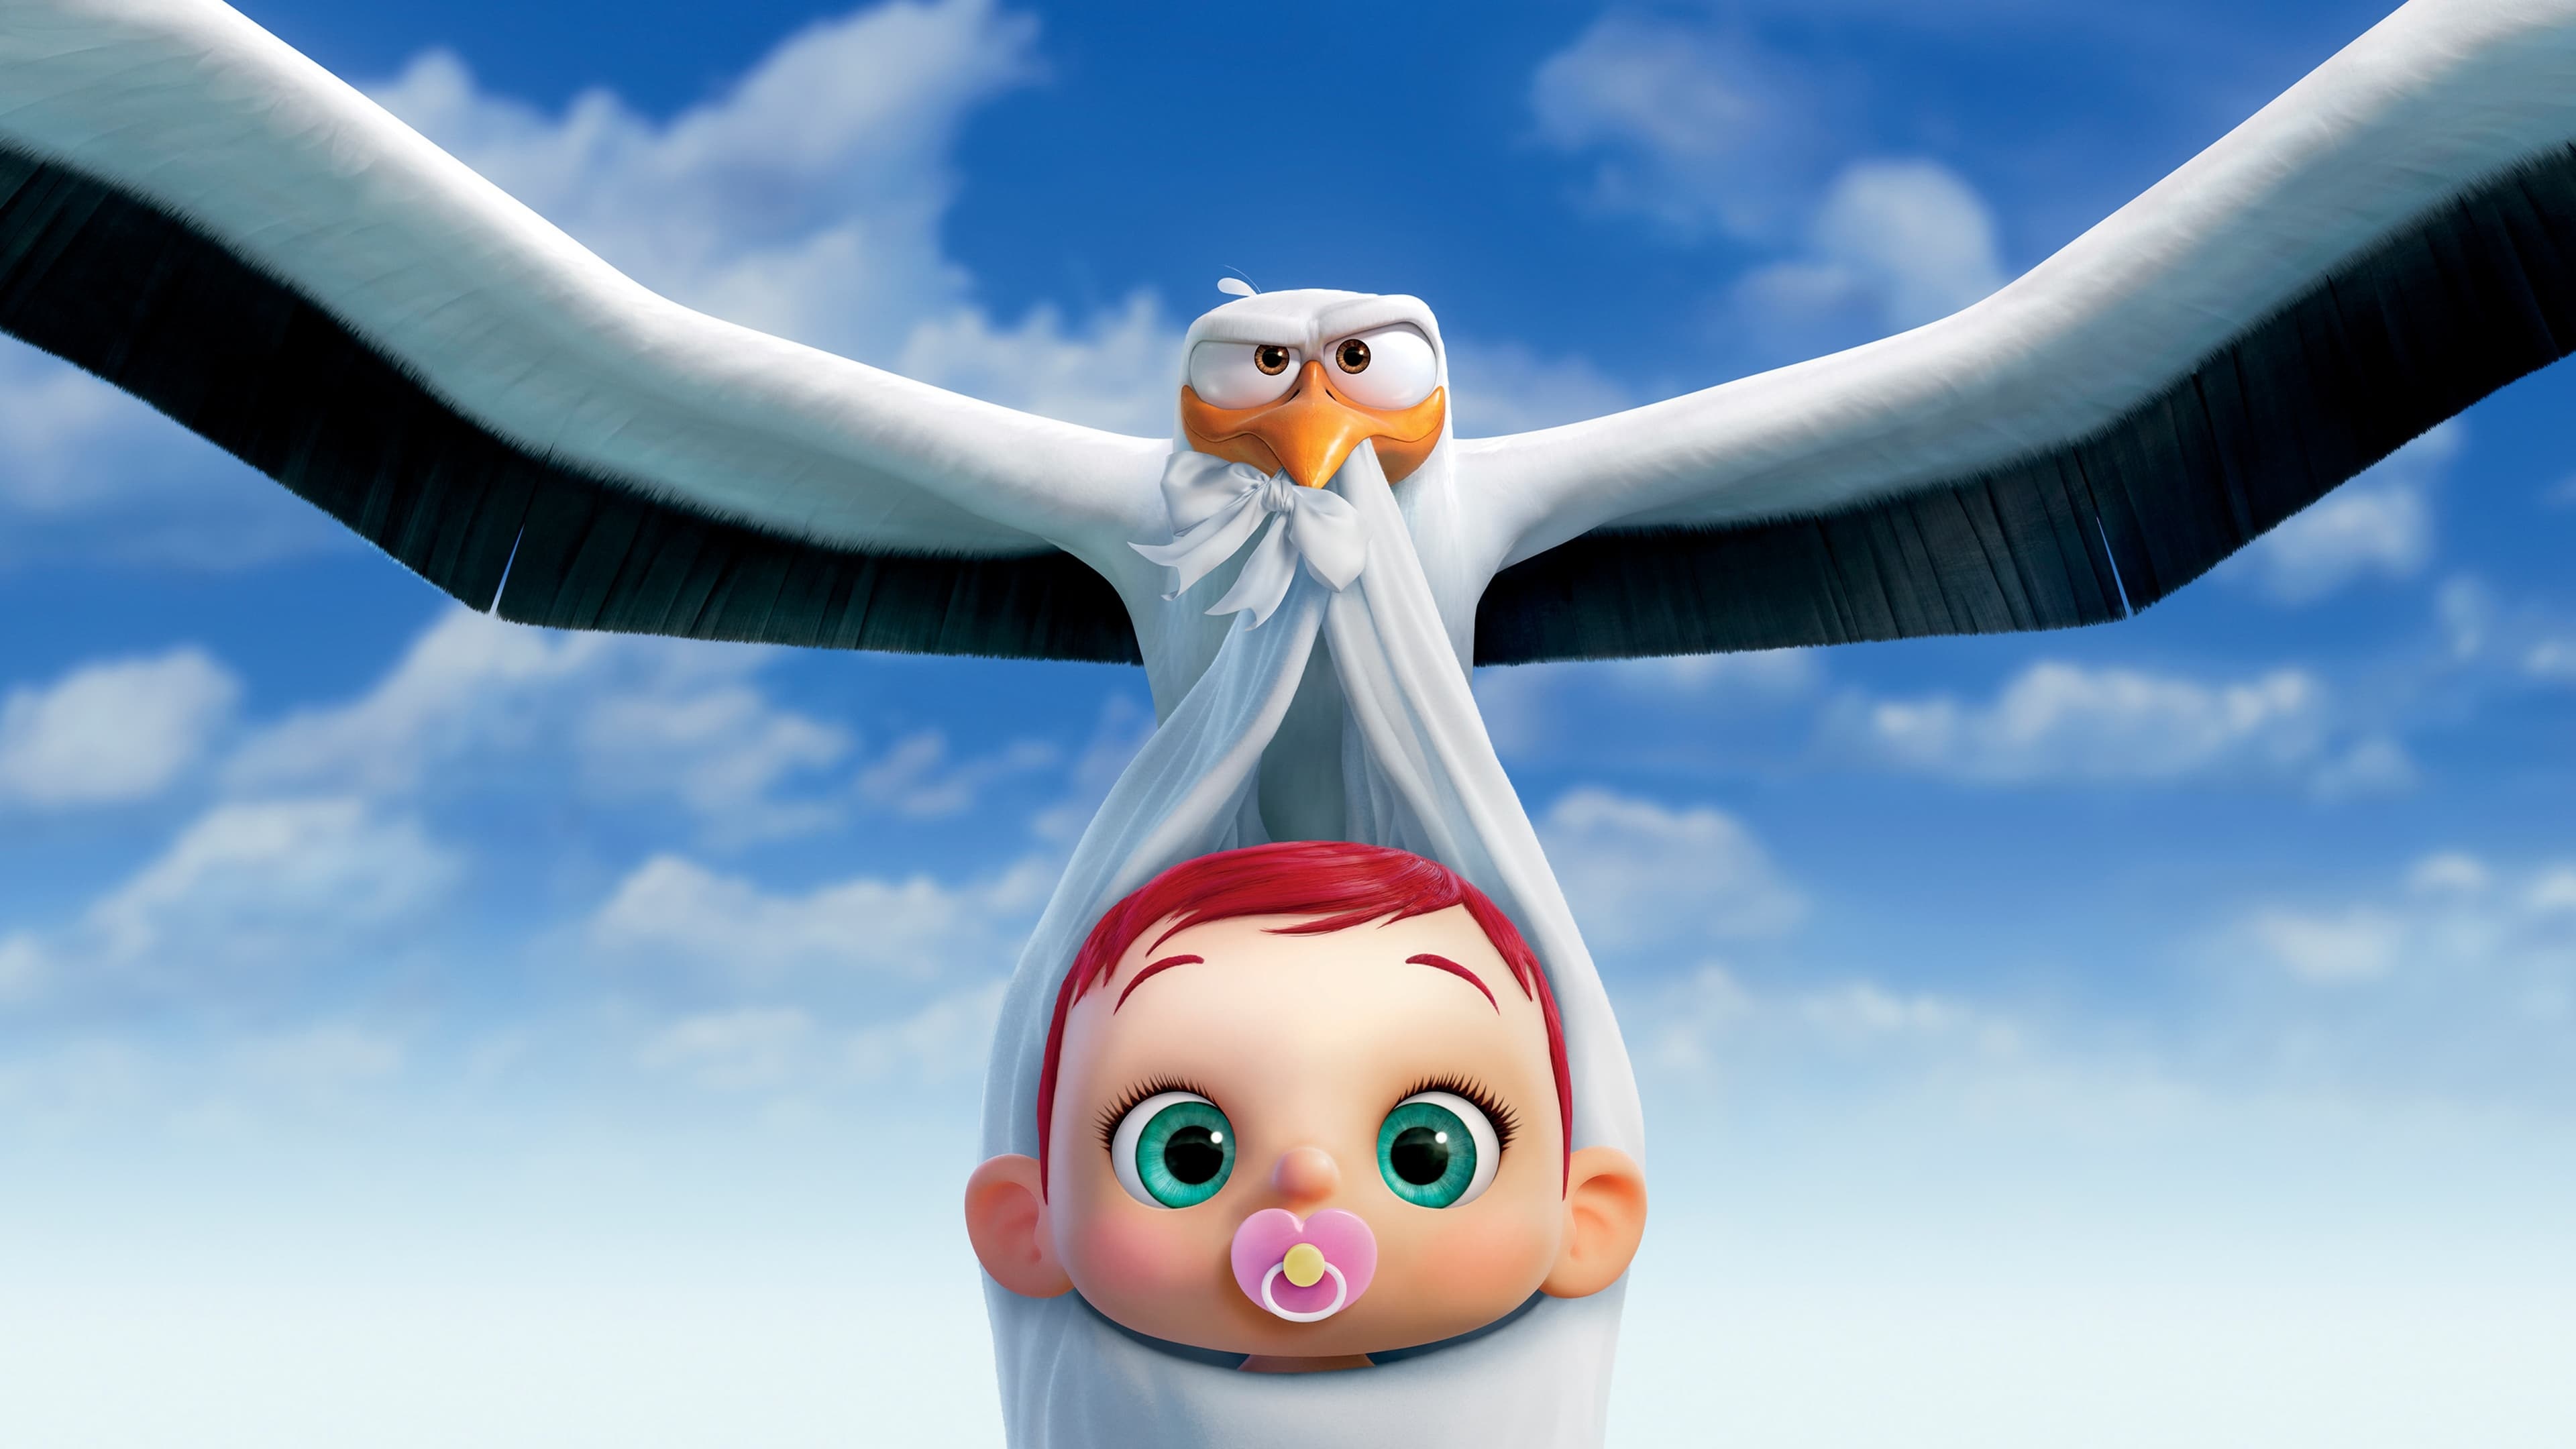 Storks Cartoon, Animated film, Charming characters, Whimsical storyline, 3840x2160 4K Desktop